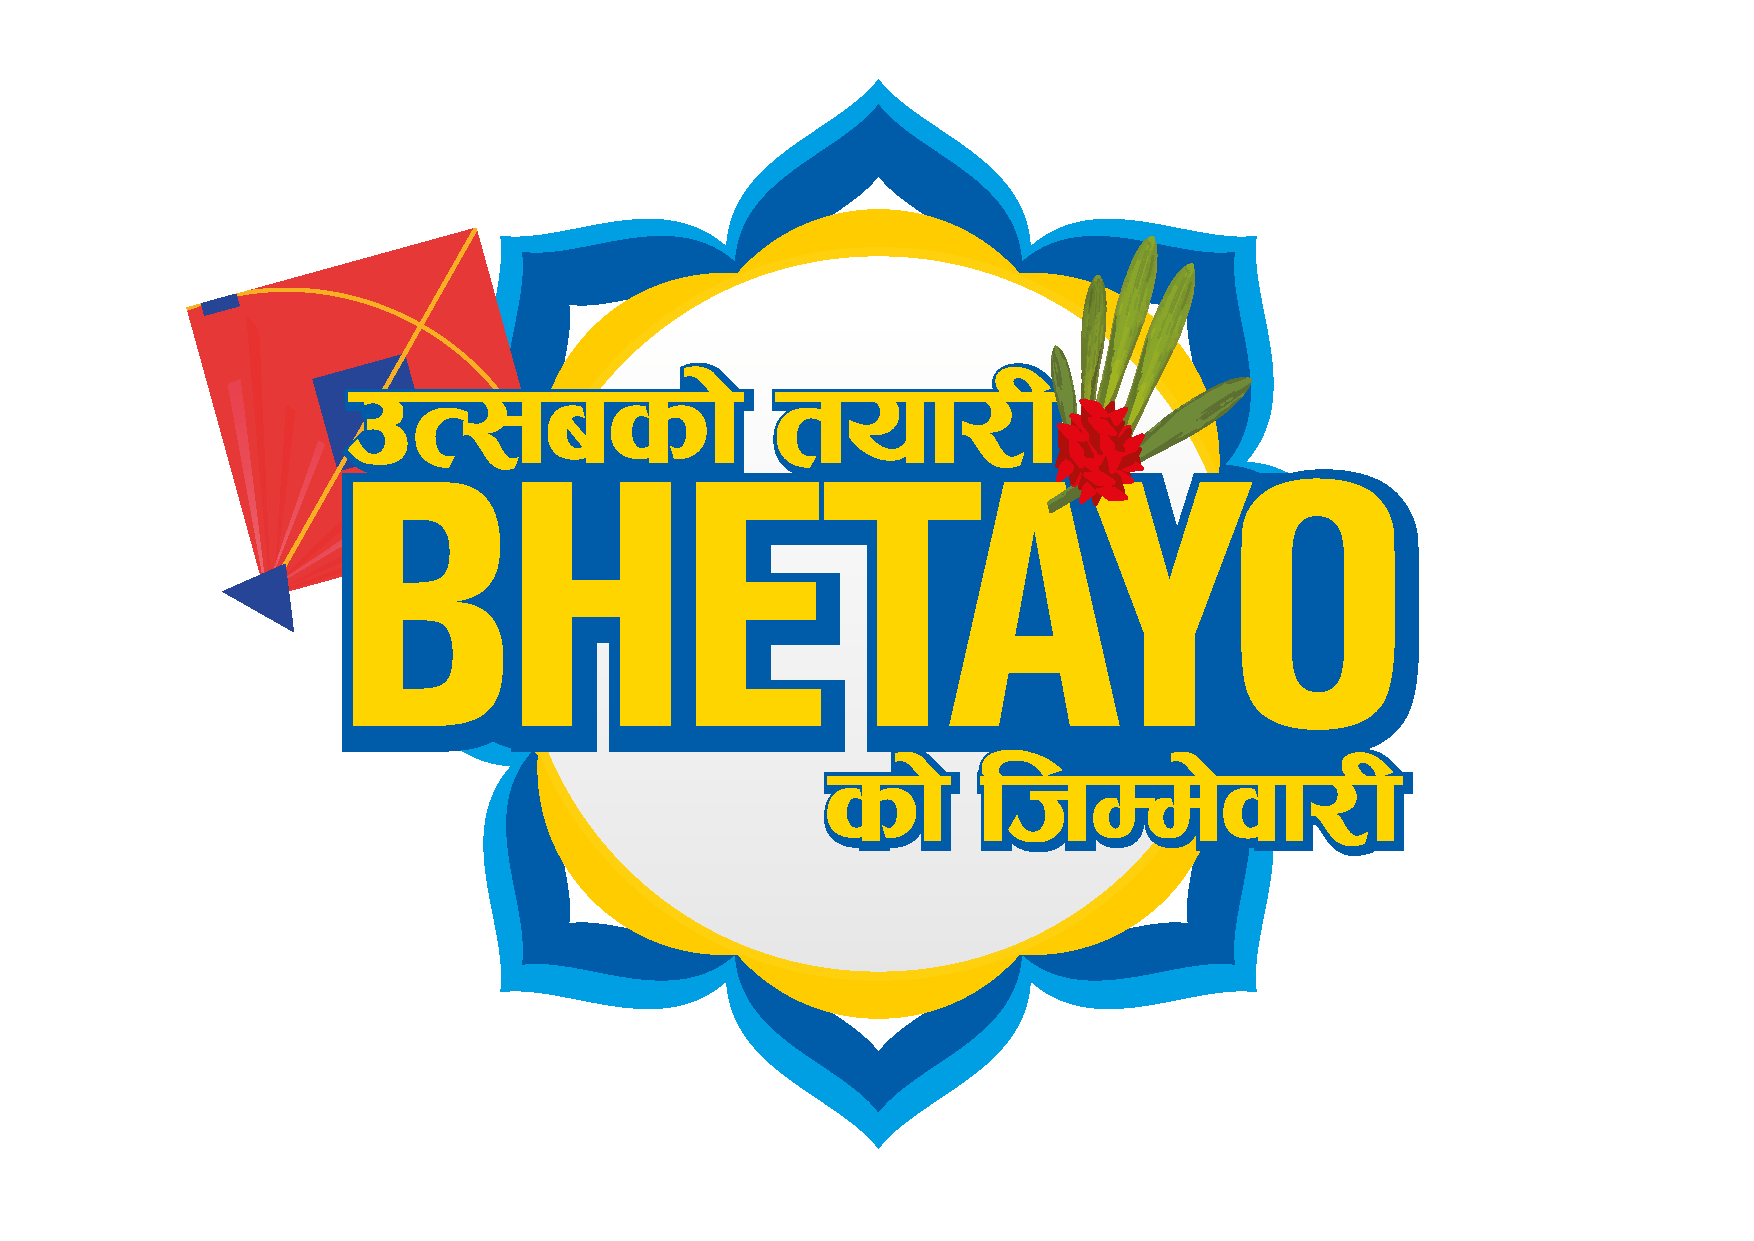 Bhetayo 